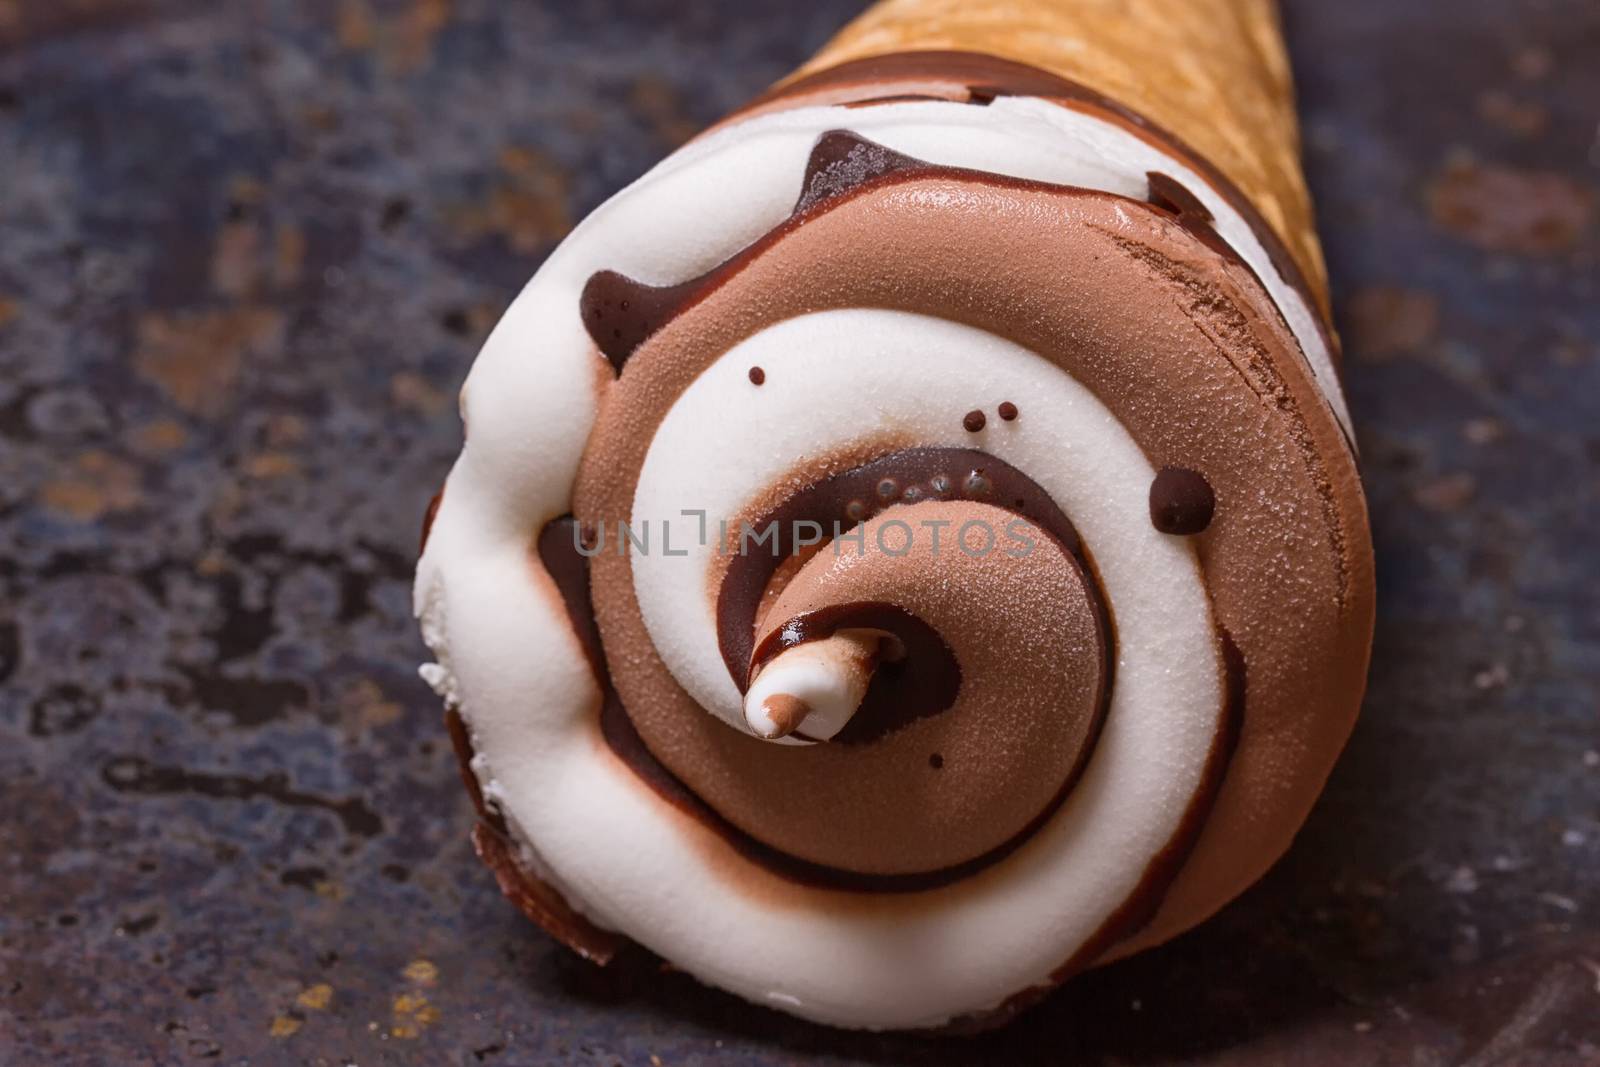 Vanilla ice cream cone with chocolate by victosha